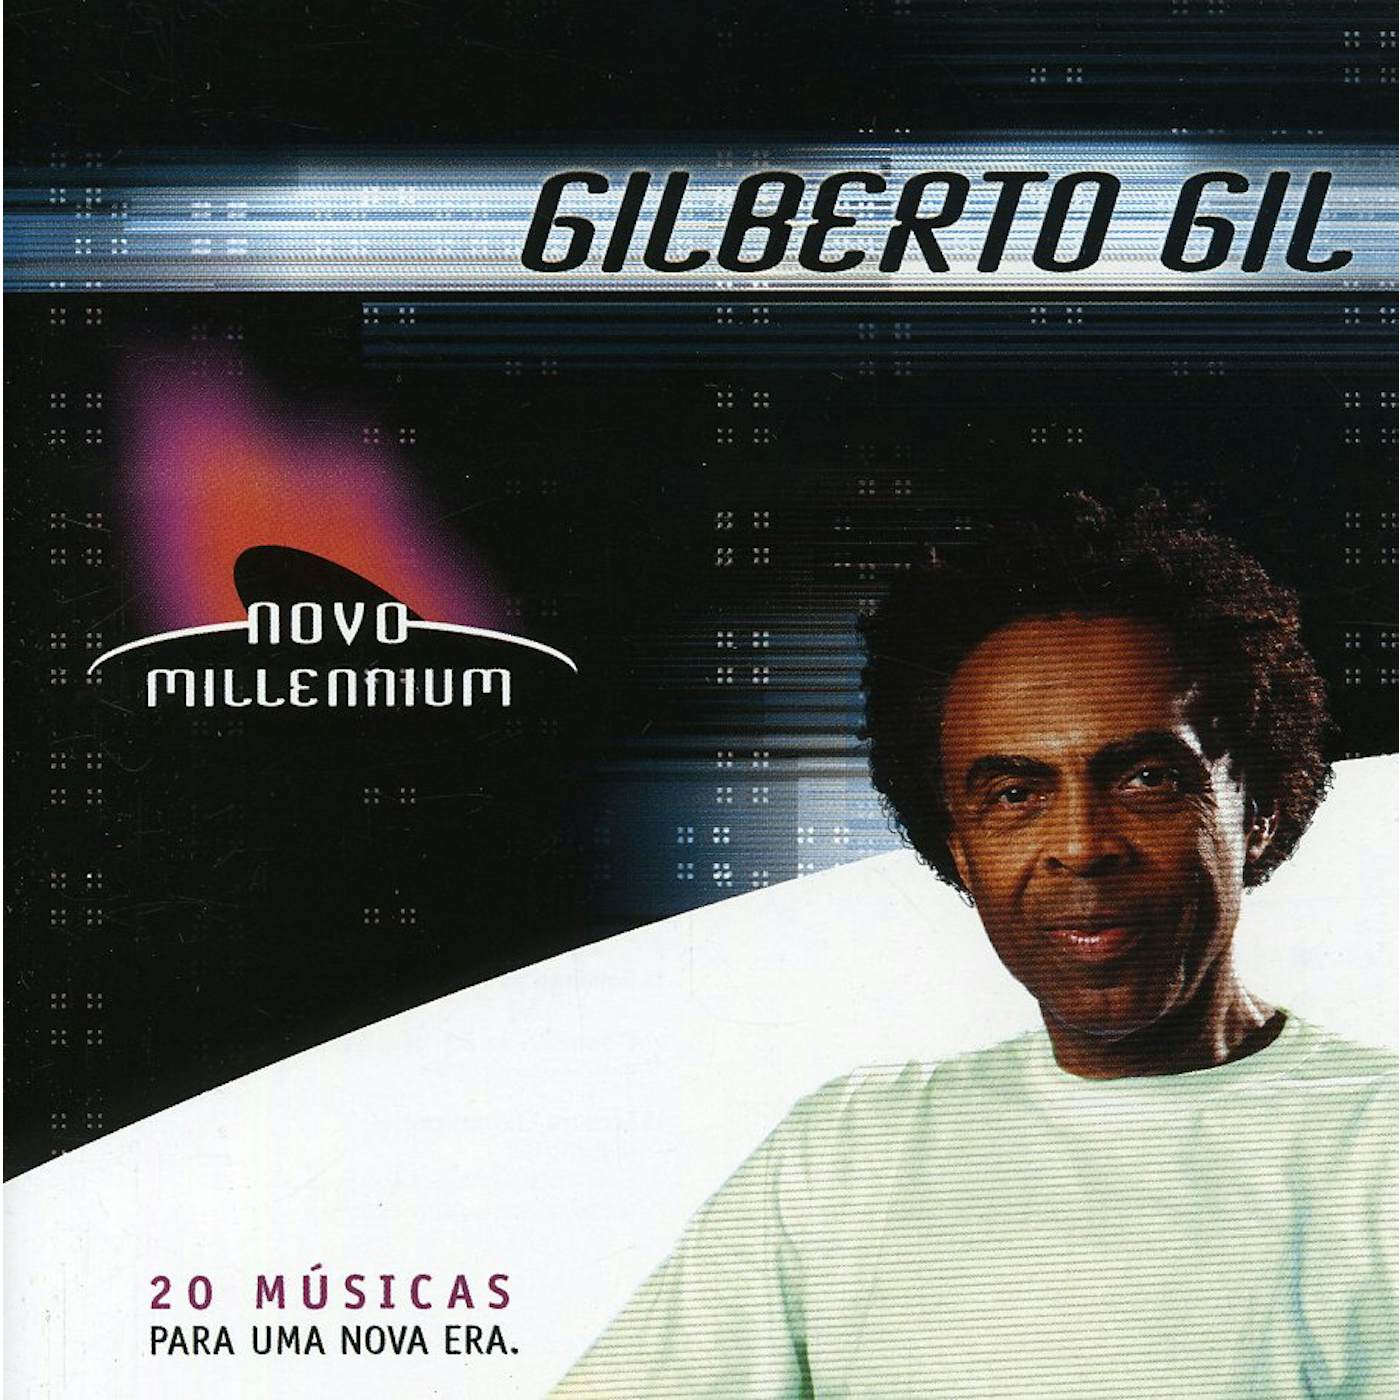 Gilberto Gil NOVO MILLENNIUM CD